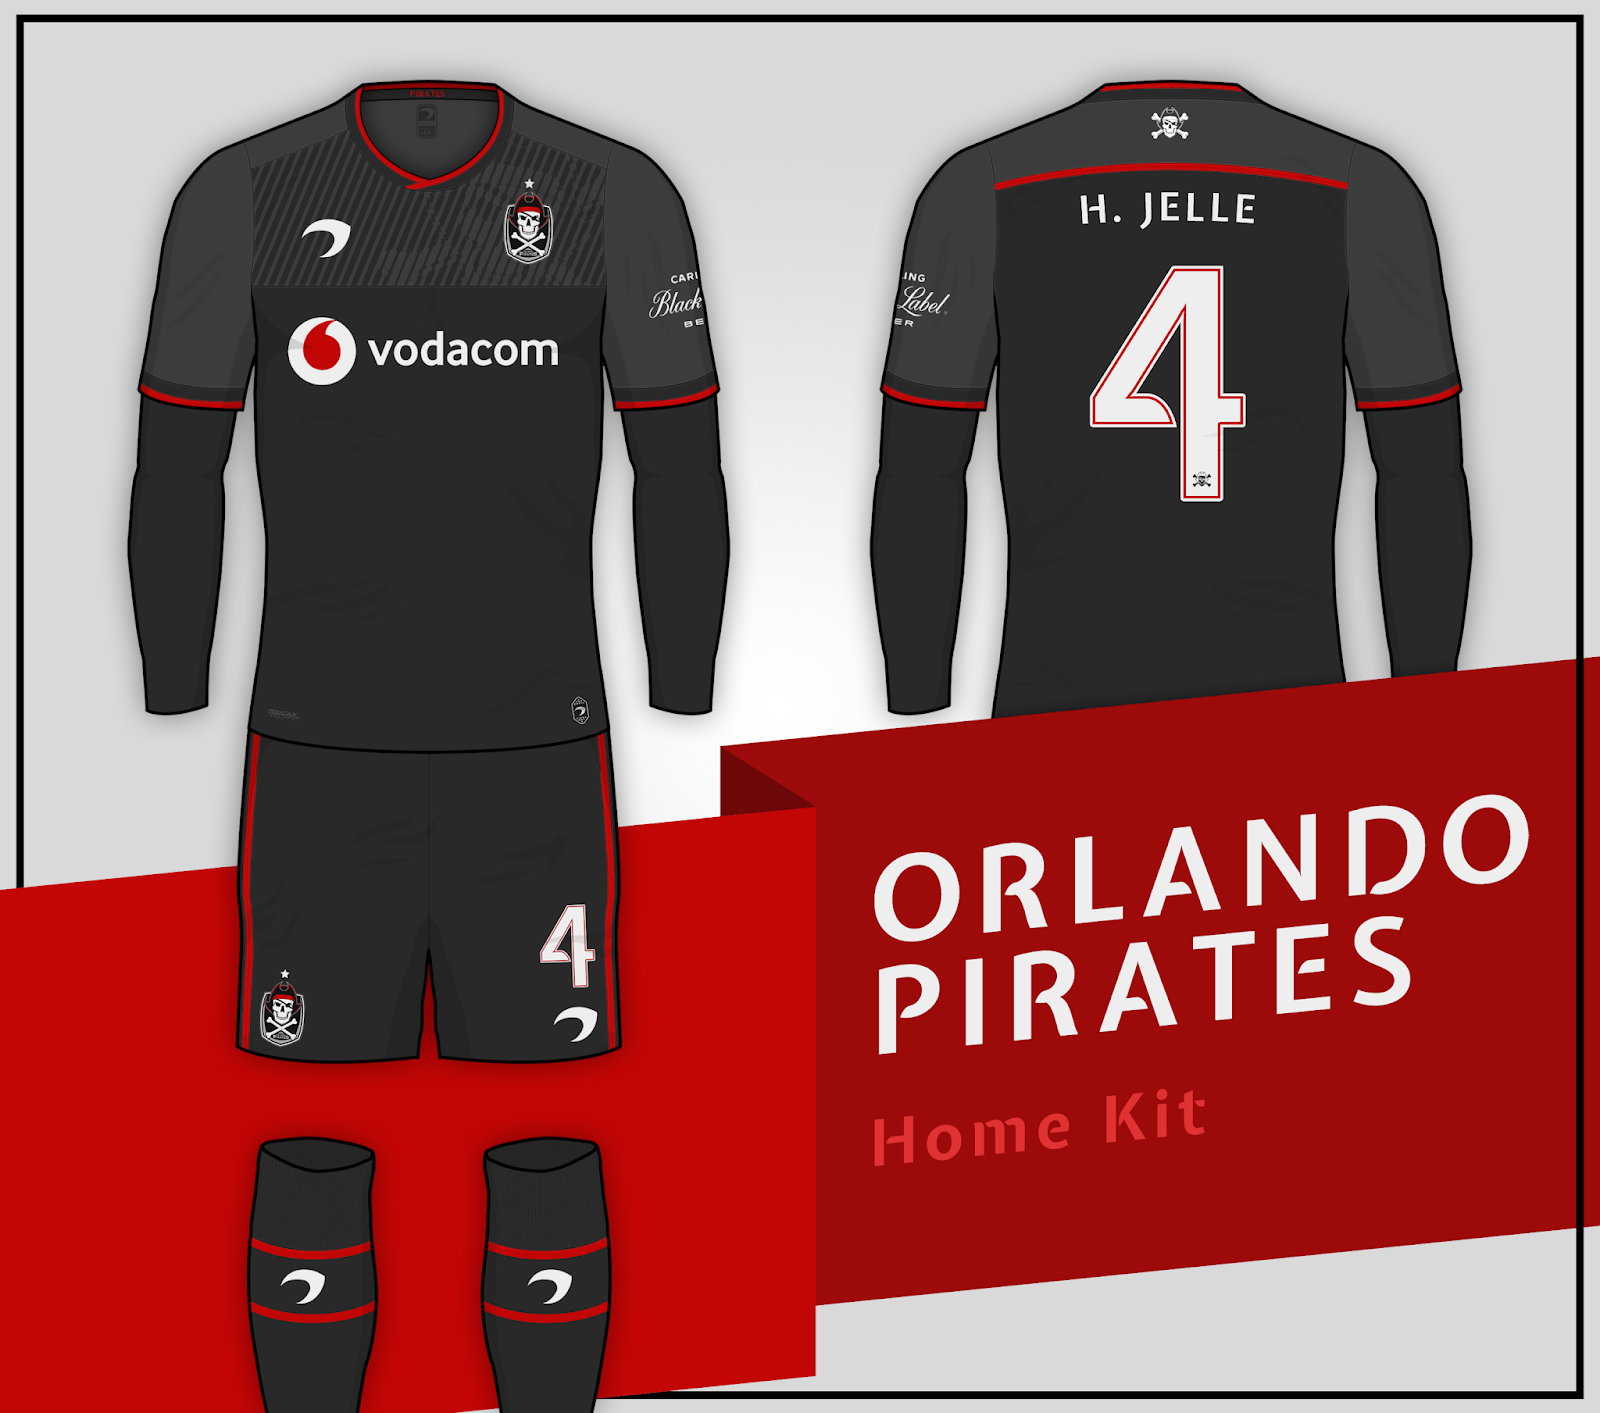 0rlando pirates new jersey